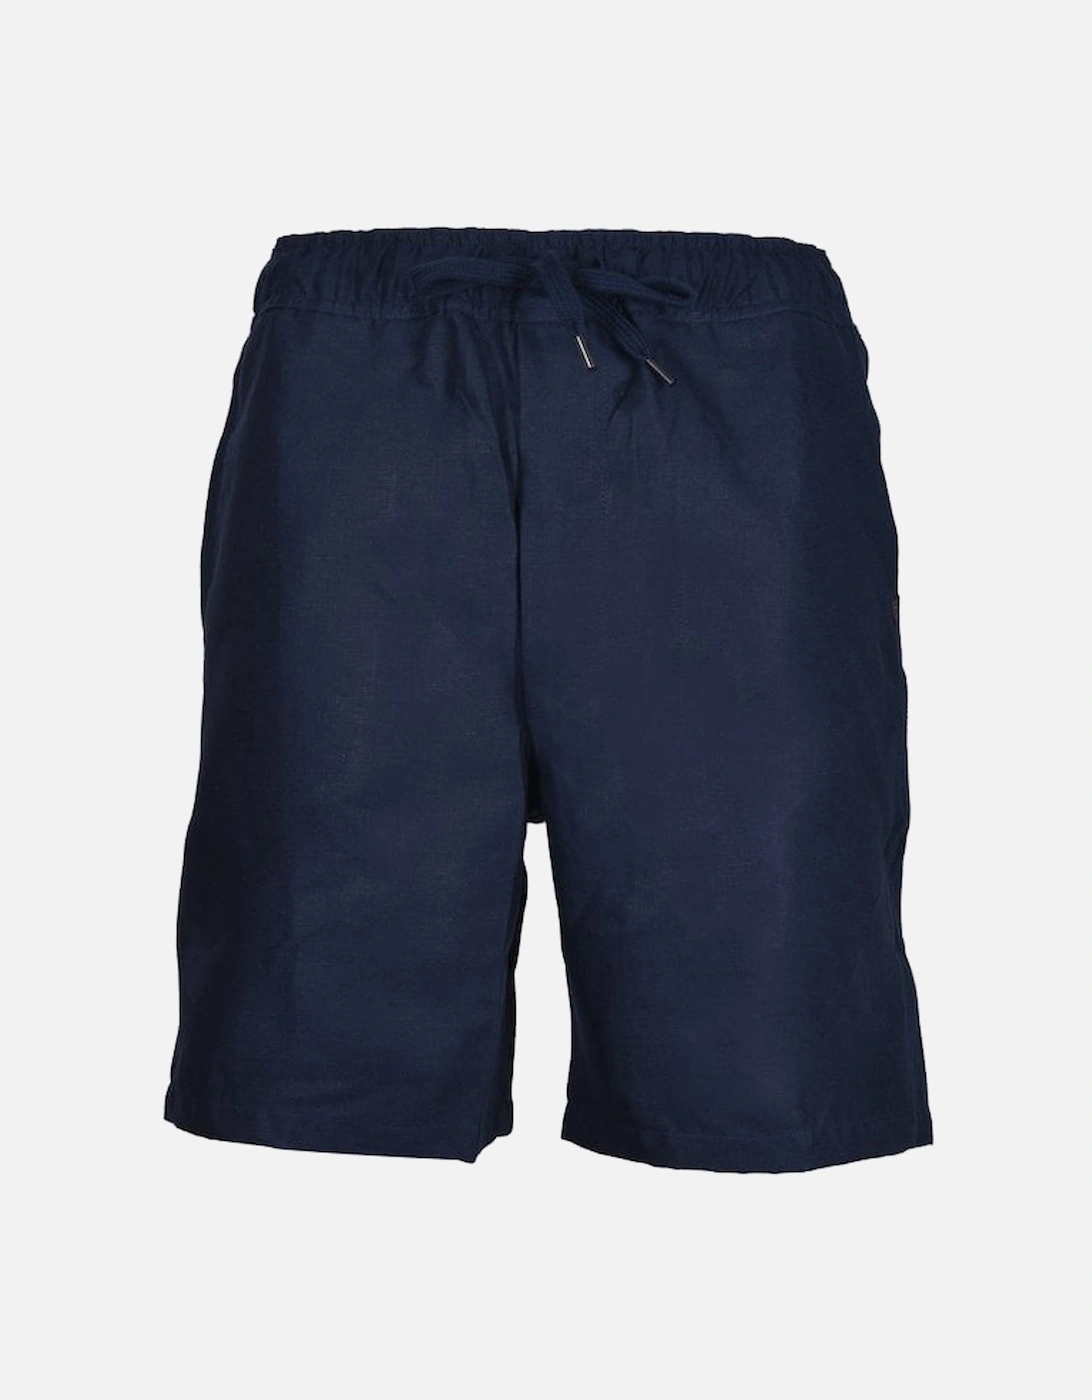 Sydney Linen Shorts, Navy, 11 of 10